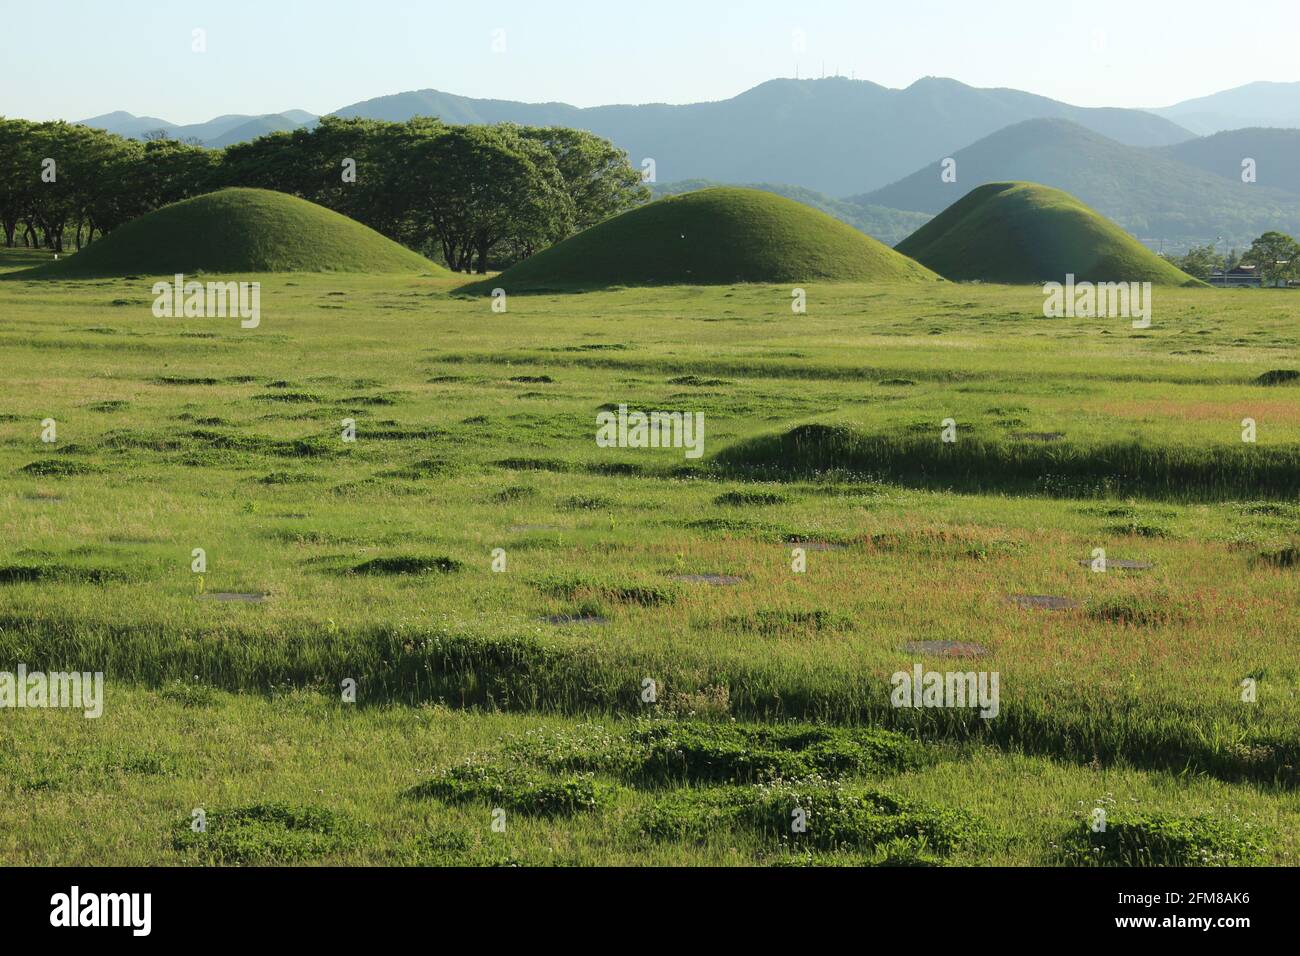 Shilla tombs in Gyeongju, South Korea Stock Photo